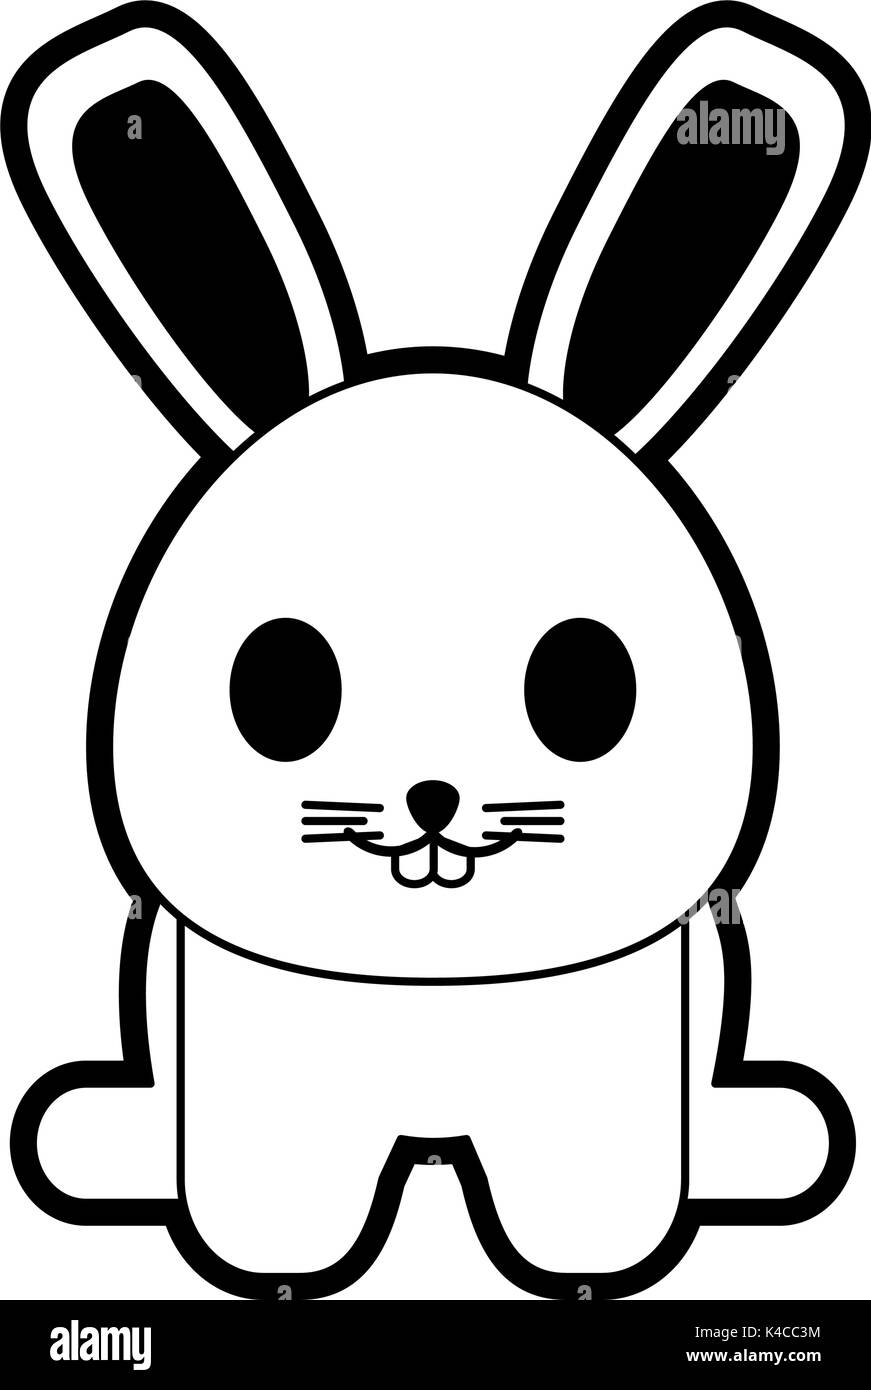 rabbit or bunny cute animal icon image  Stock Vector